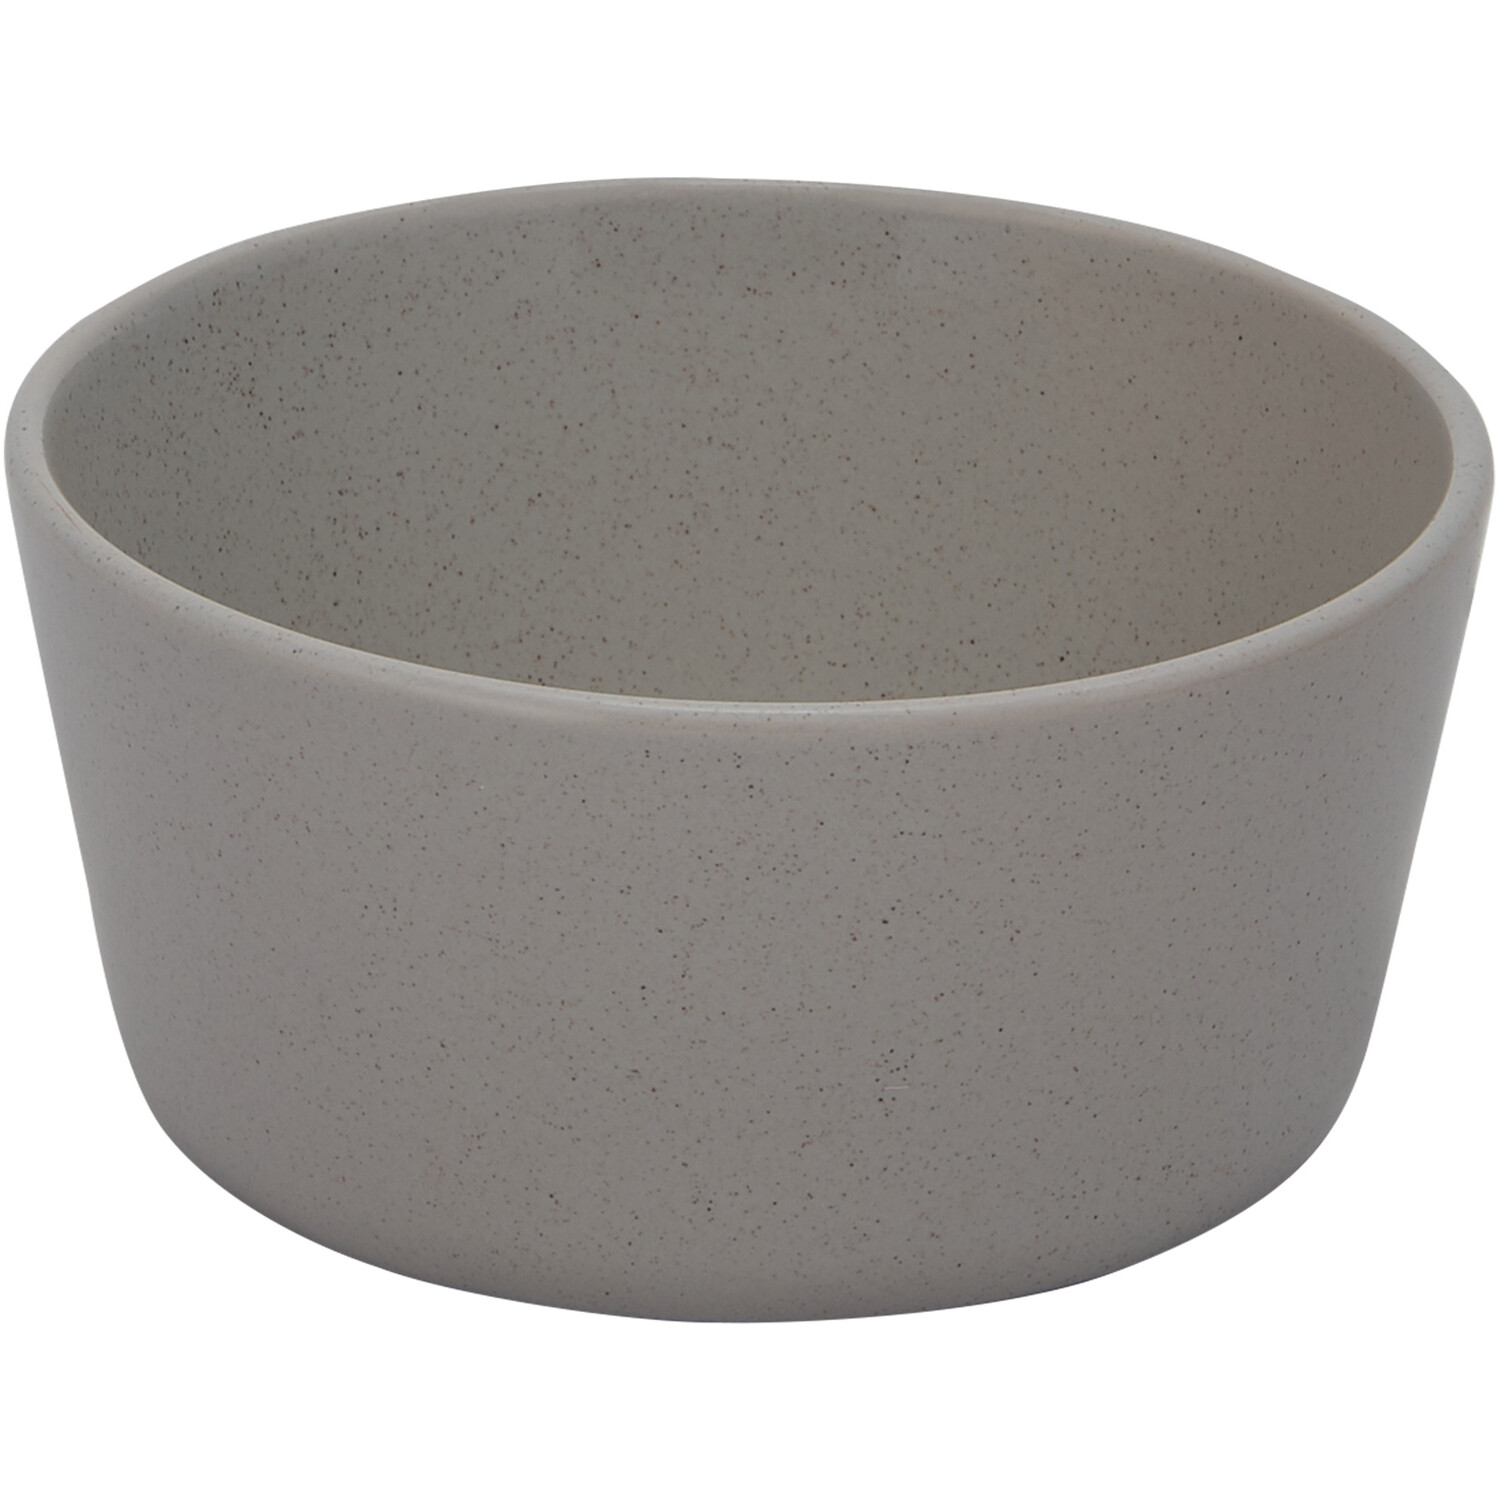 Alta Bowl - Grey Image 1